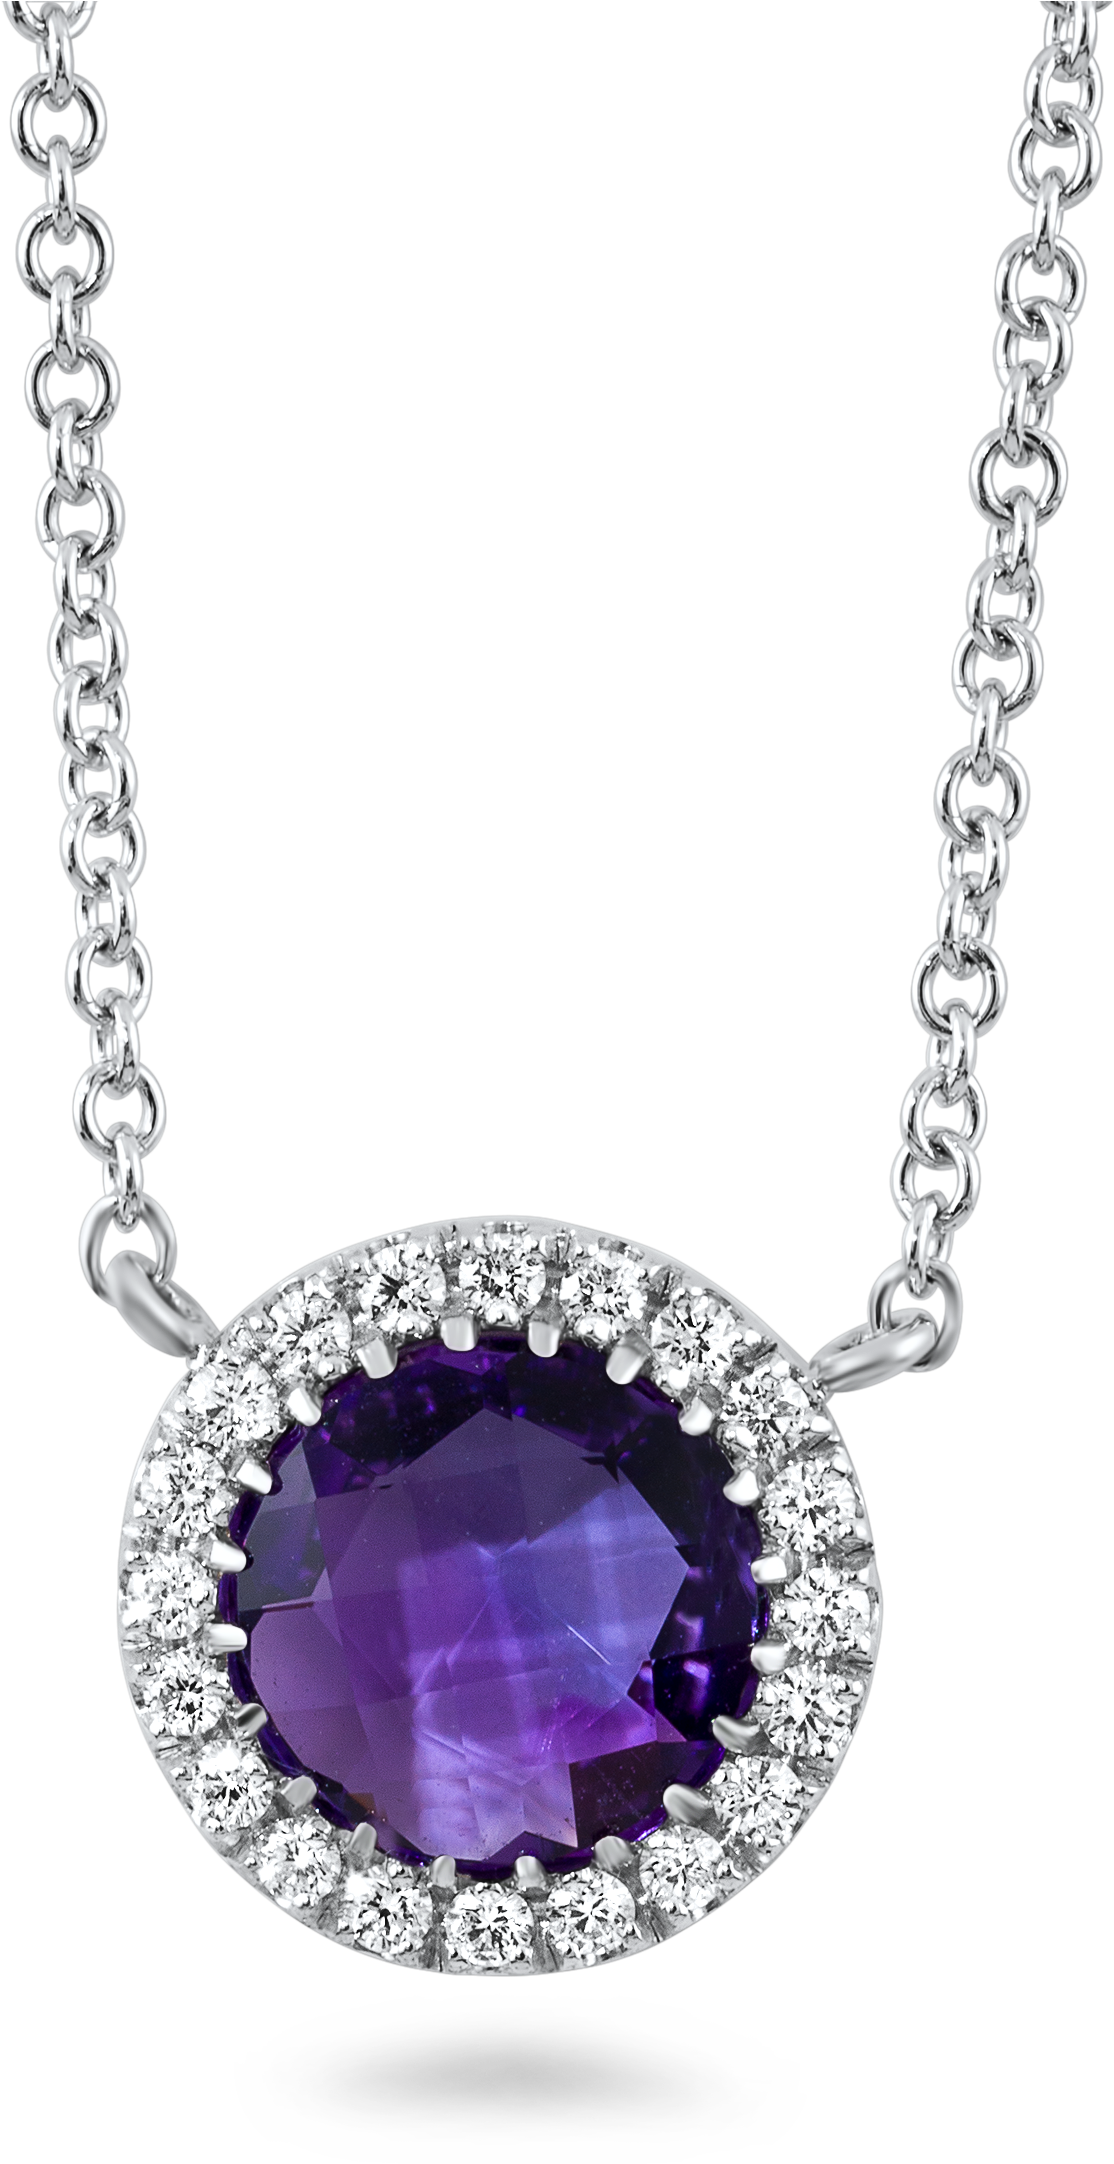 A Purple Stone On A Chain